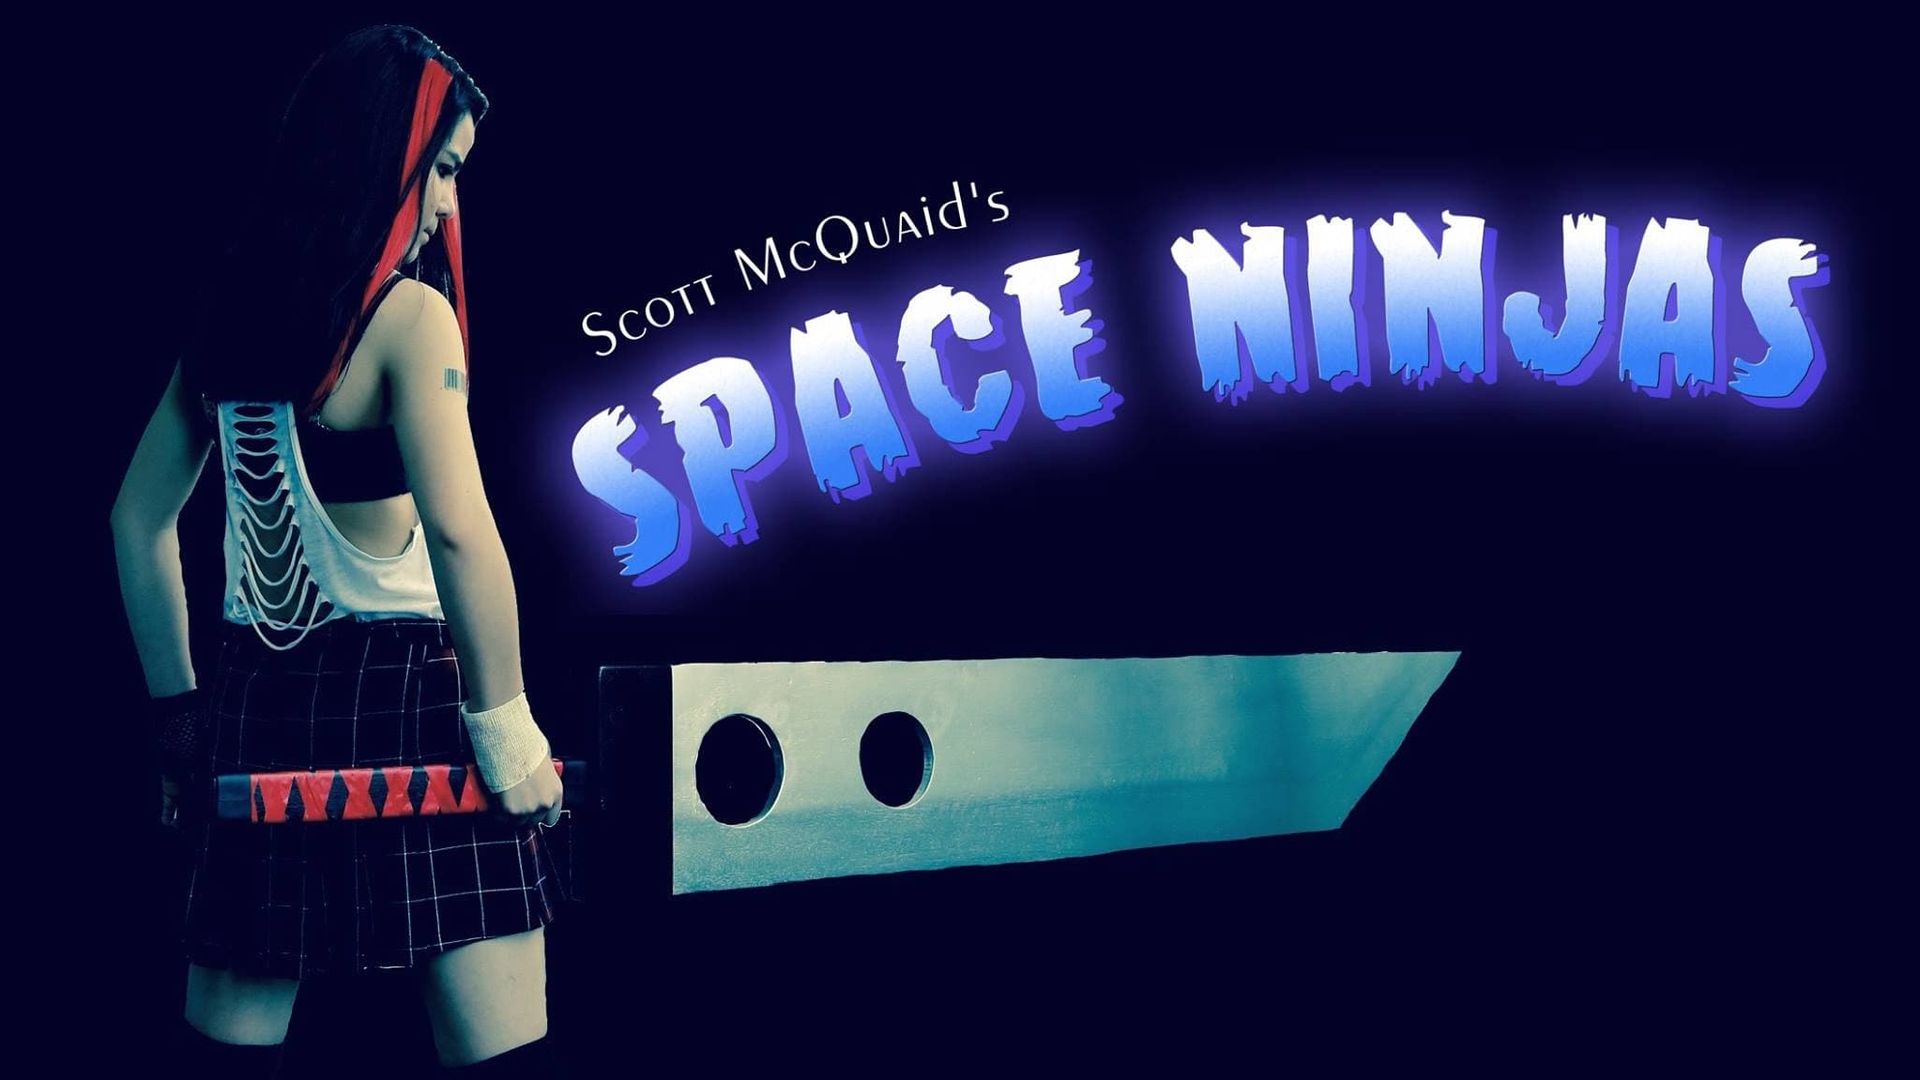 Space Ninjas background